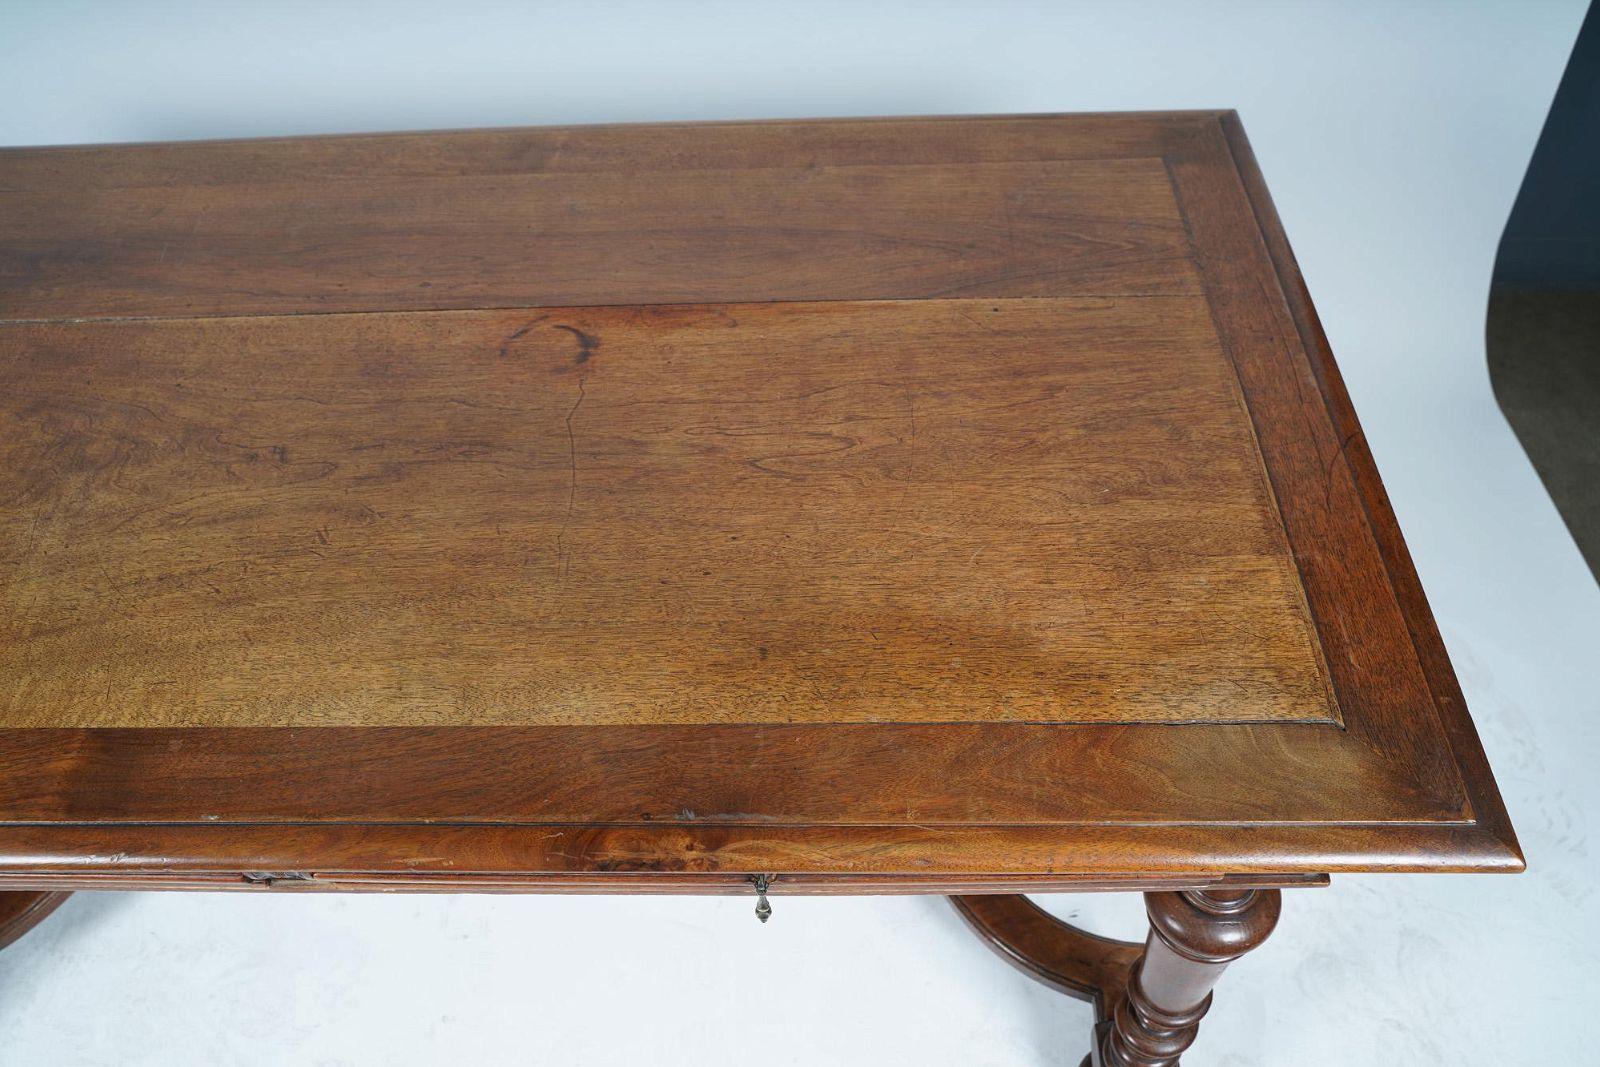 Antique American Renaissance Revival Walnut Library Table Desk Mid 19th Century For Sale 1